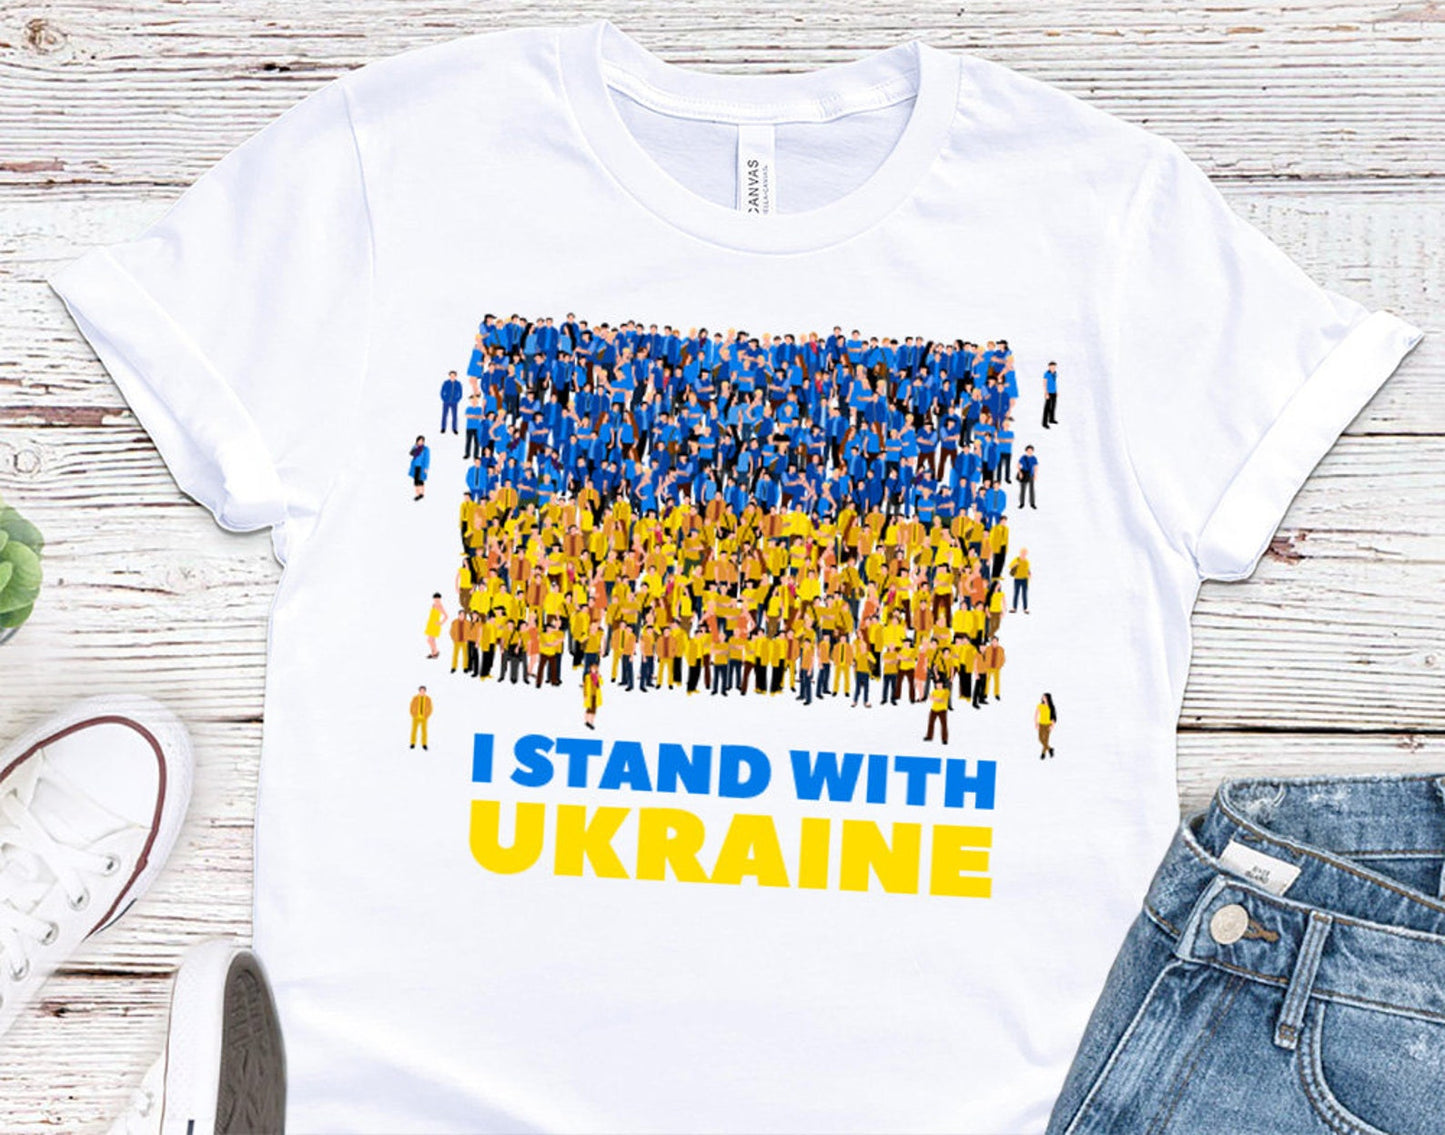 I Stand With Ukraine T-Shirt Design for men of women - Digital PNG file - Stop war in Ukraine, All will be Ukraine - 37 Design Unit